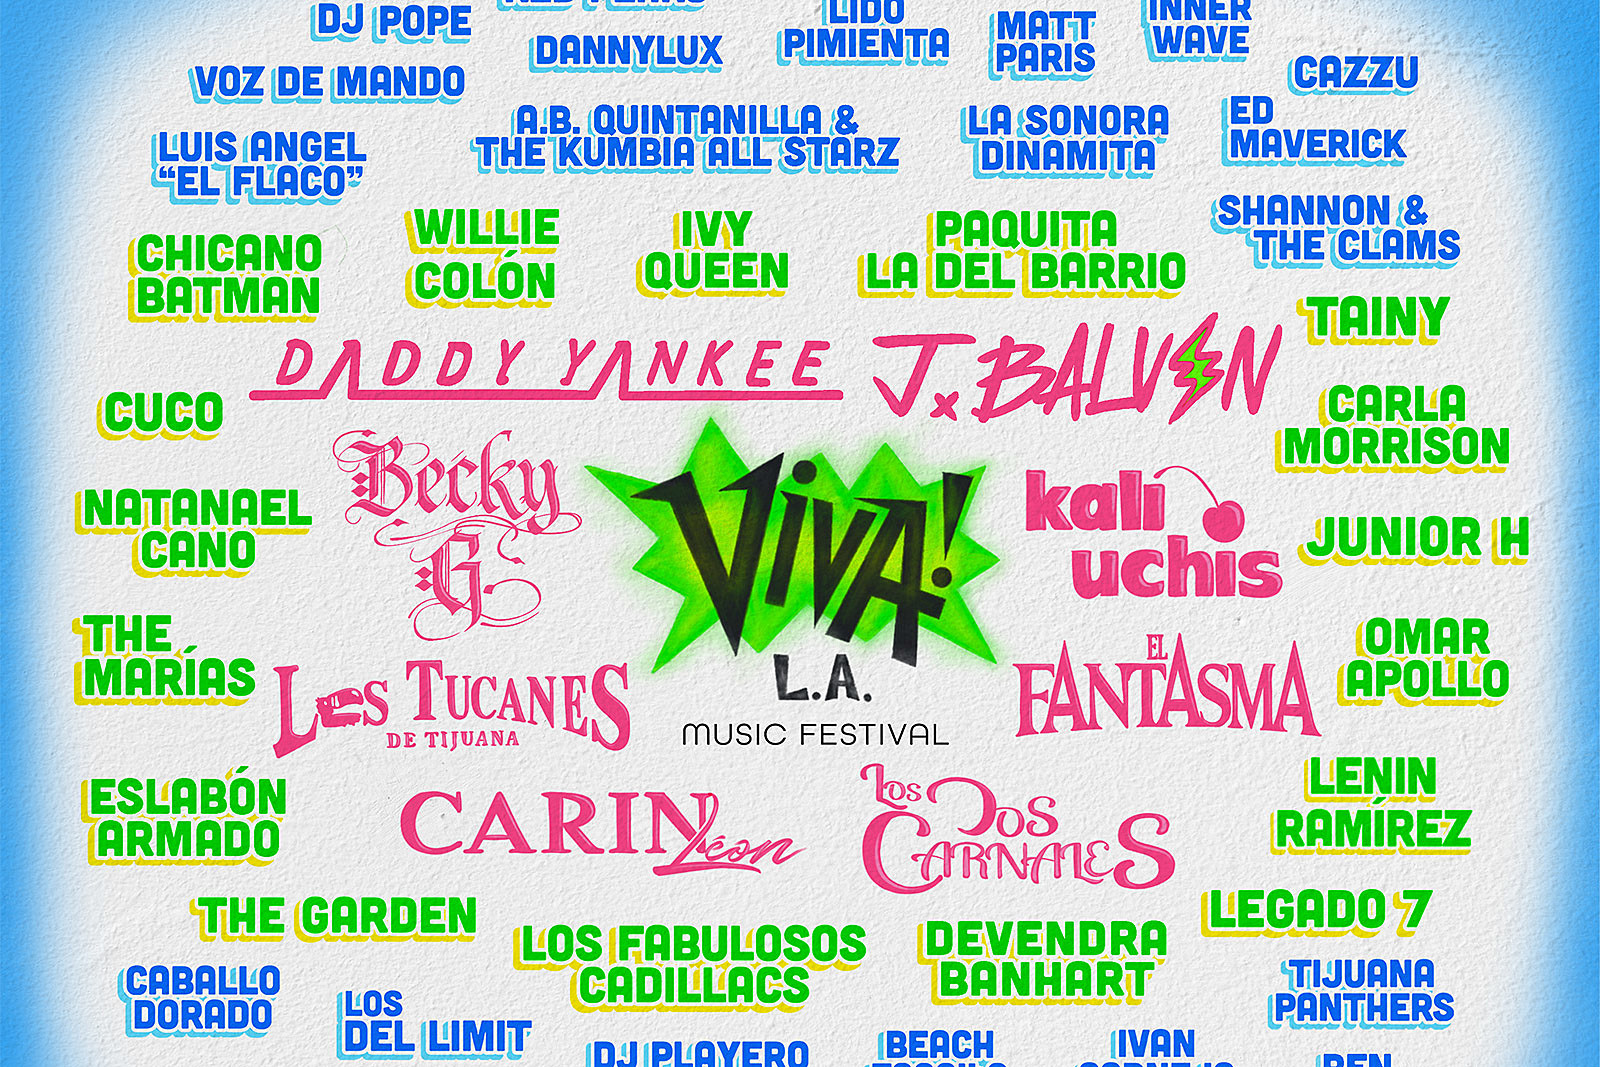 Daddy Yankee, J Balvin, Kali Uchis & more playing new Goldenvoice fest  Viva! L.A. Music Festival